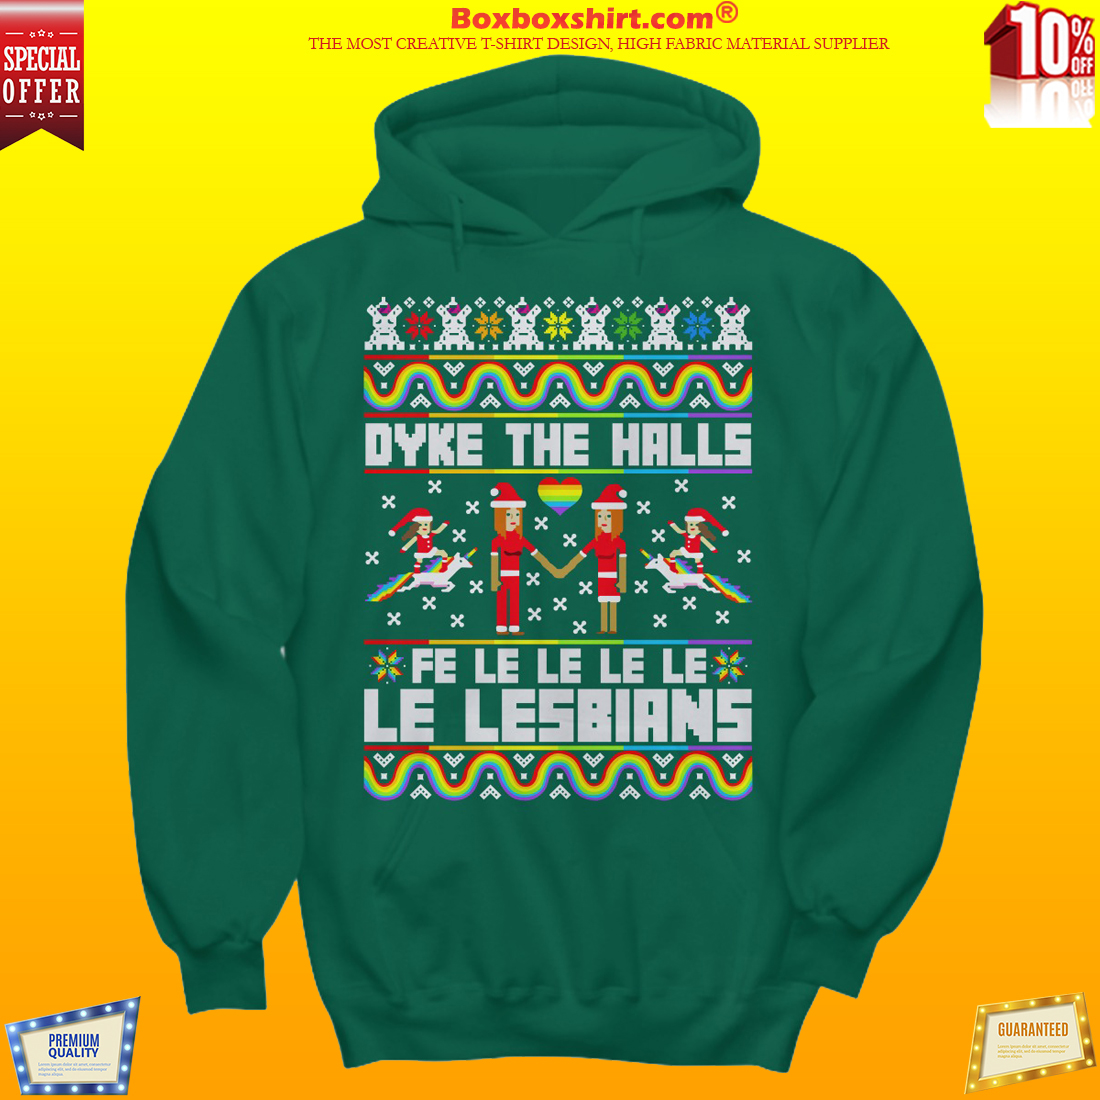 Dyke the halls le lesbians sweater shirt